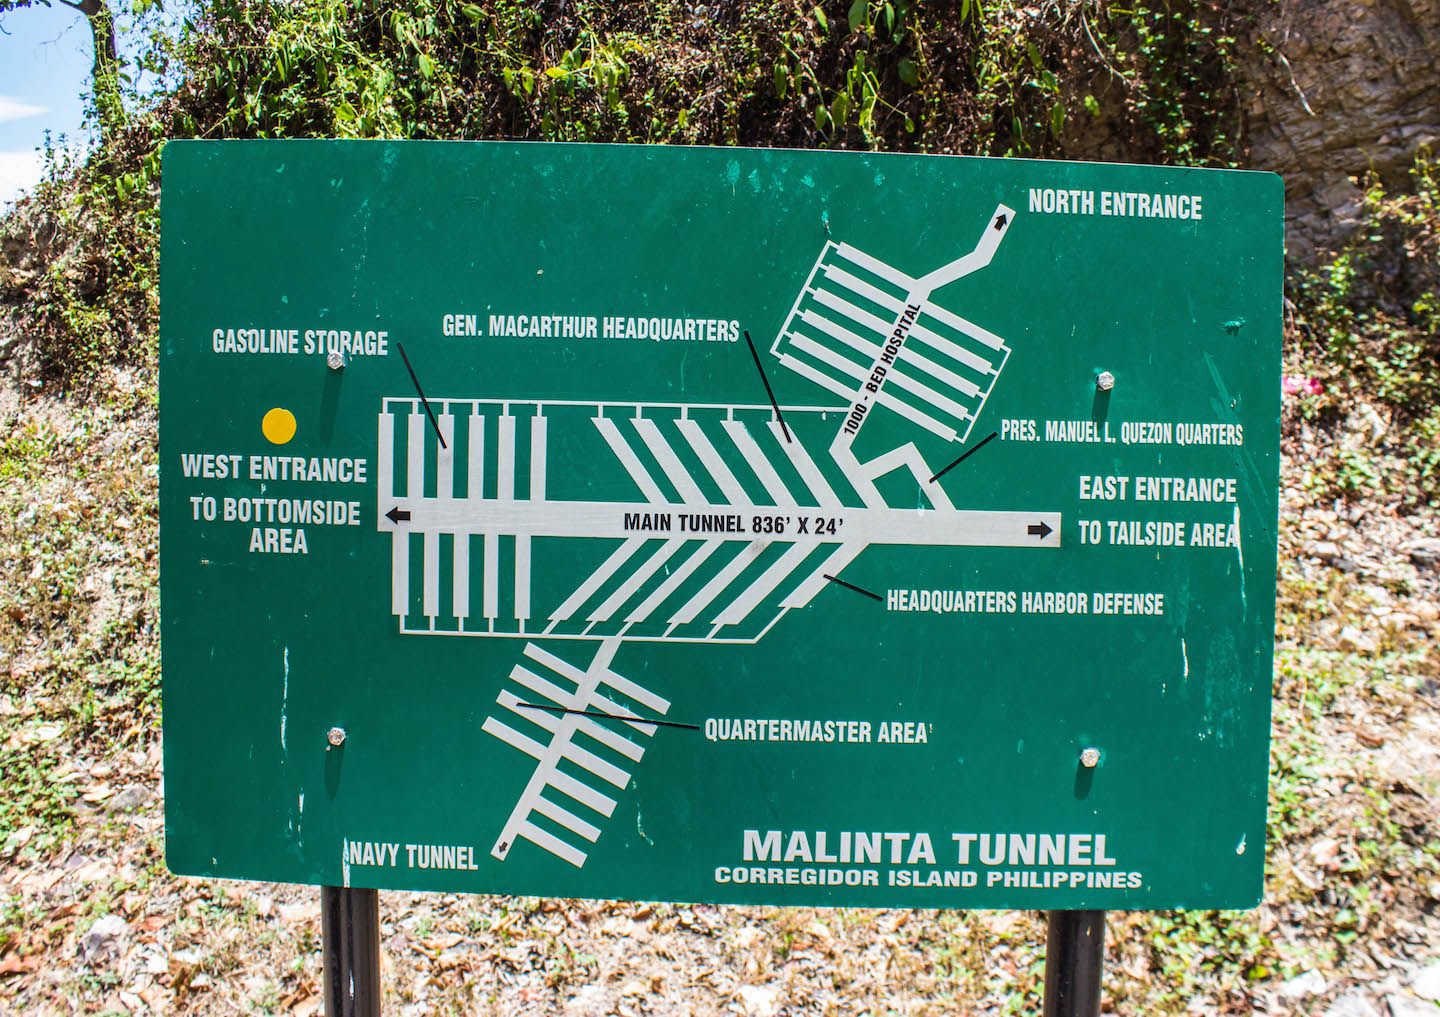 Map of Malinta Tunnel, Corregidor, Philippines